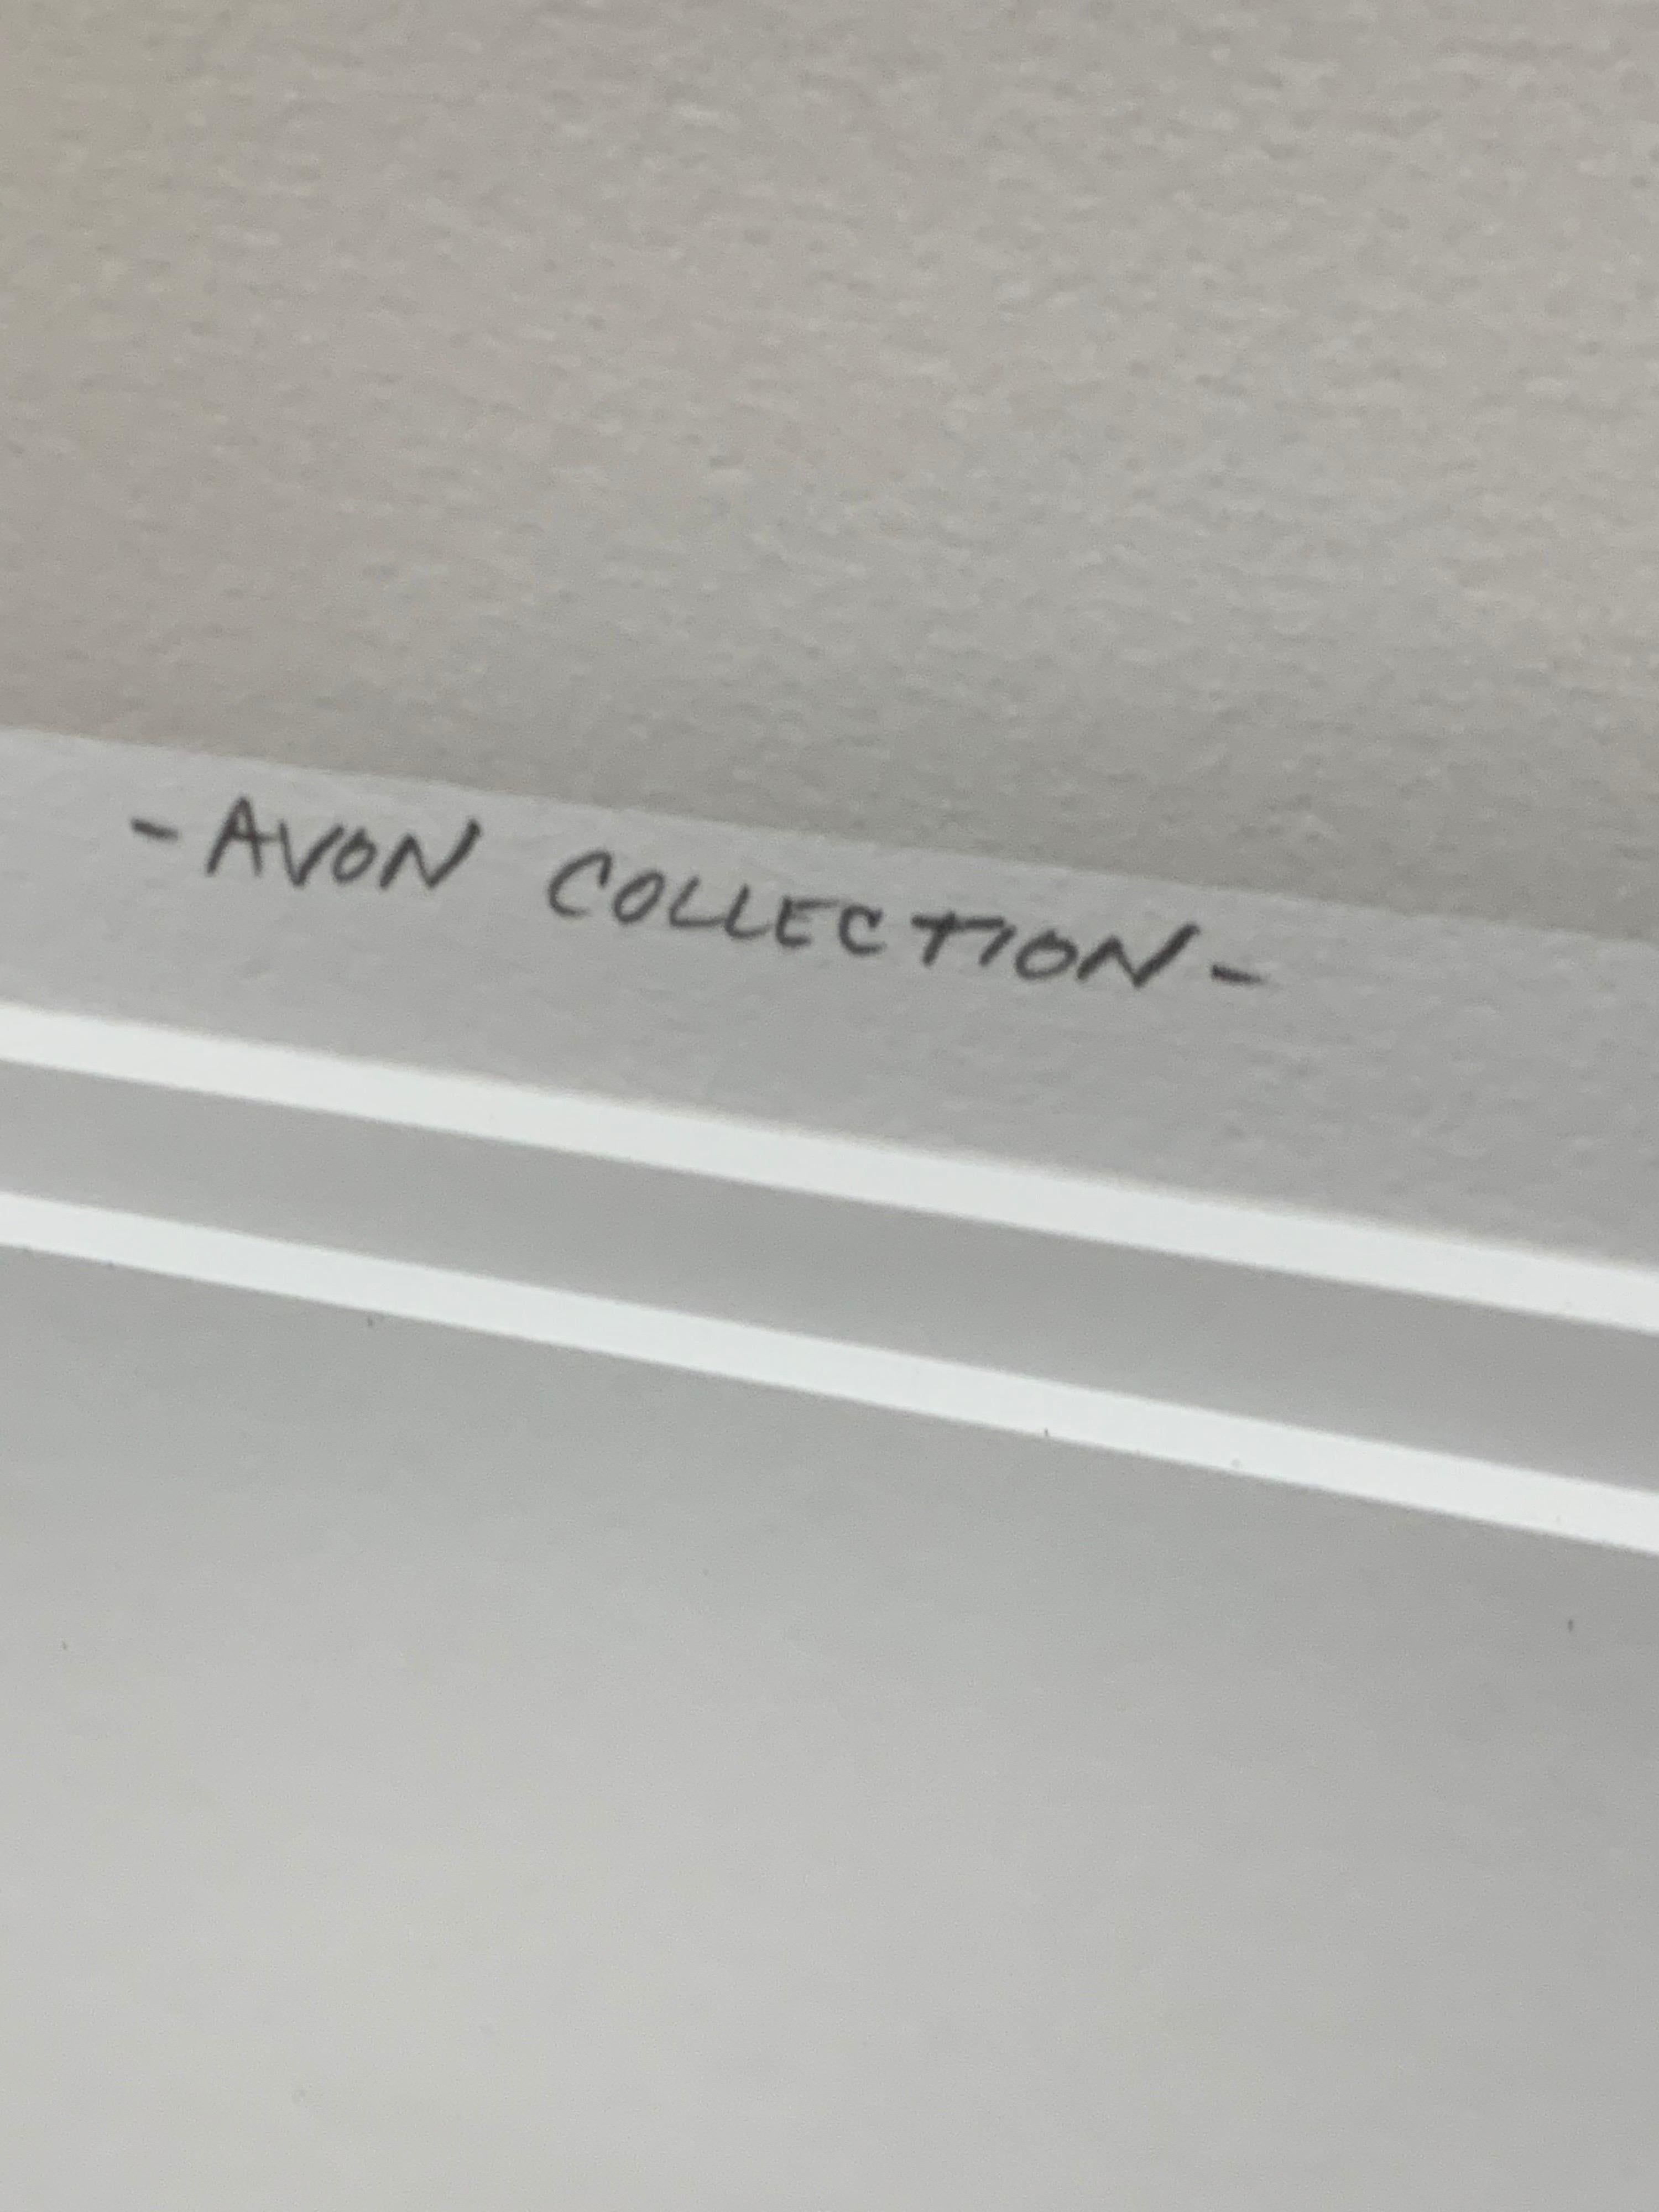 Plastic Avon Collection Original Signed Steven N. Meyers Photograph 